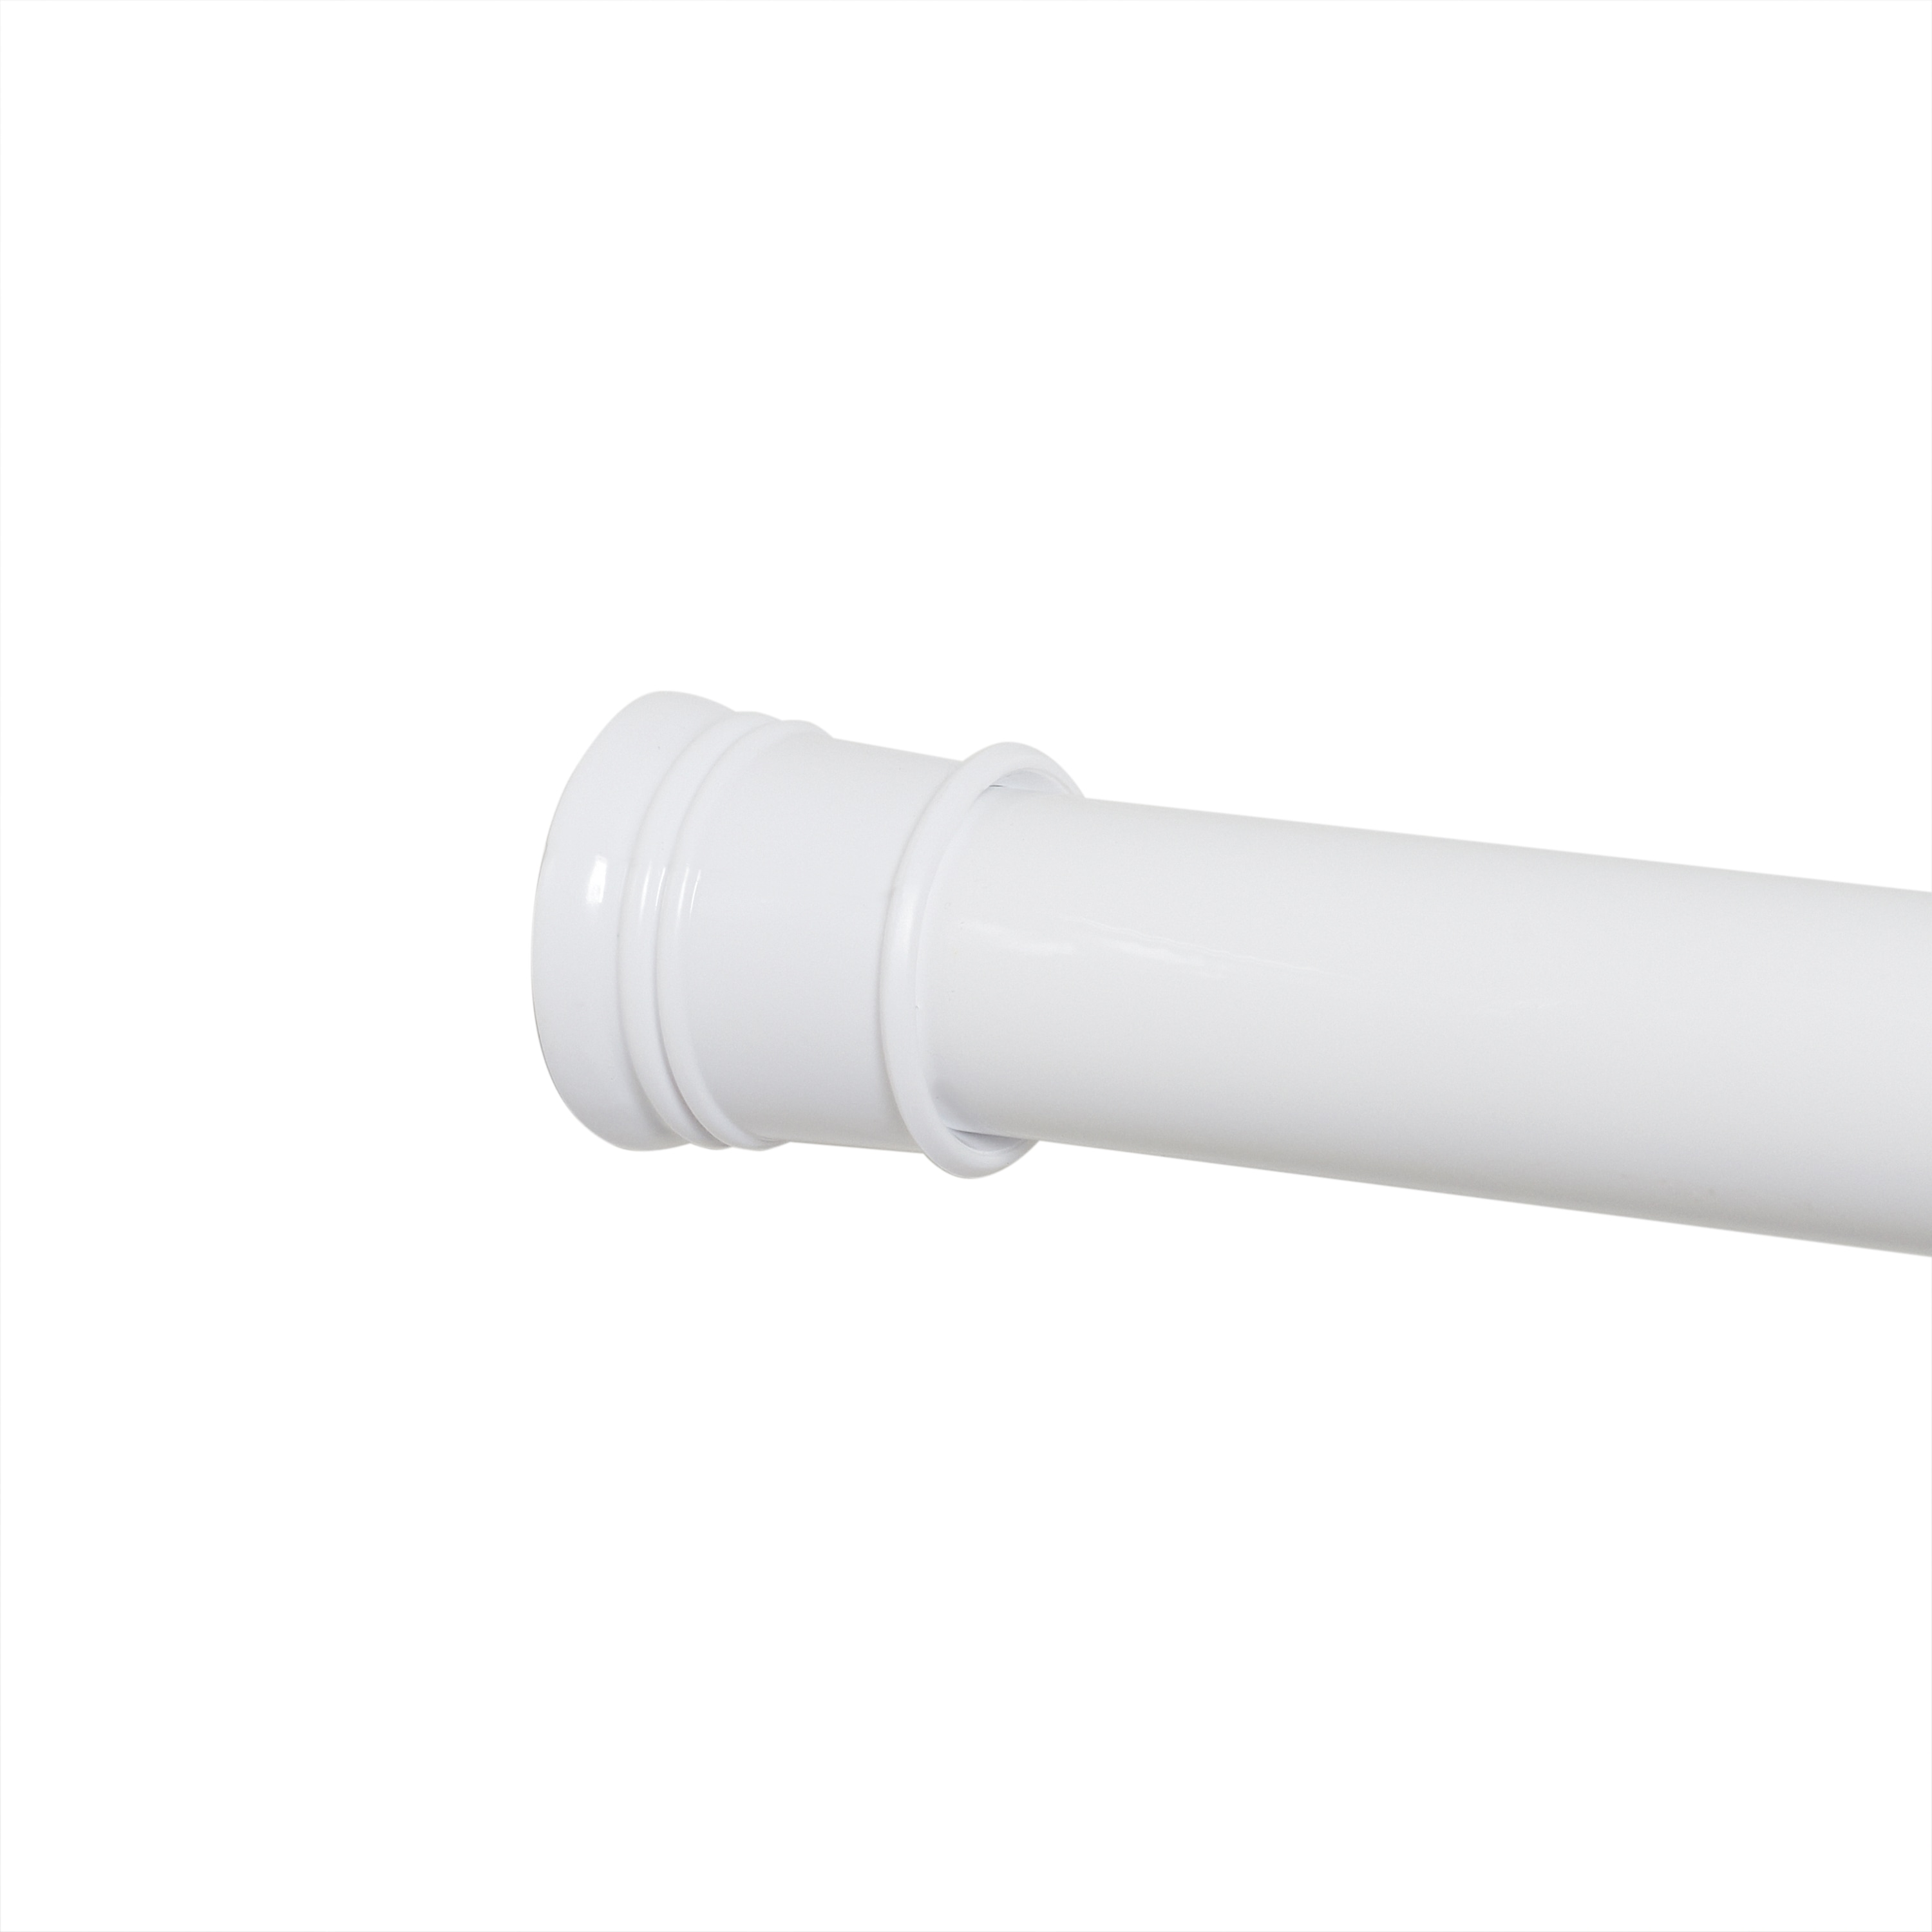 Zenna Home 36 in. - 60 in. PVC Tension Shower Rod Cover in White